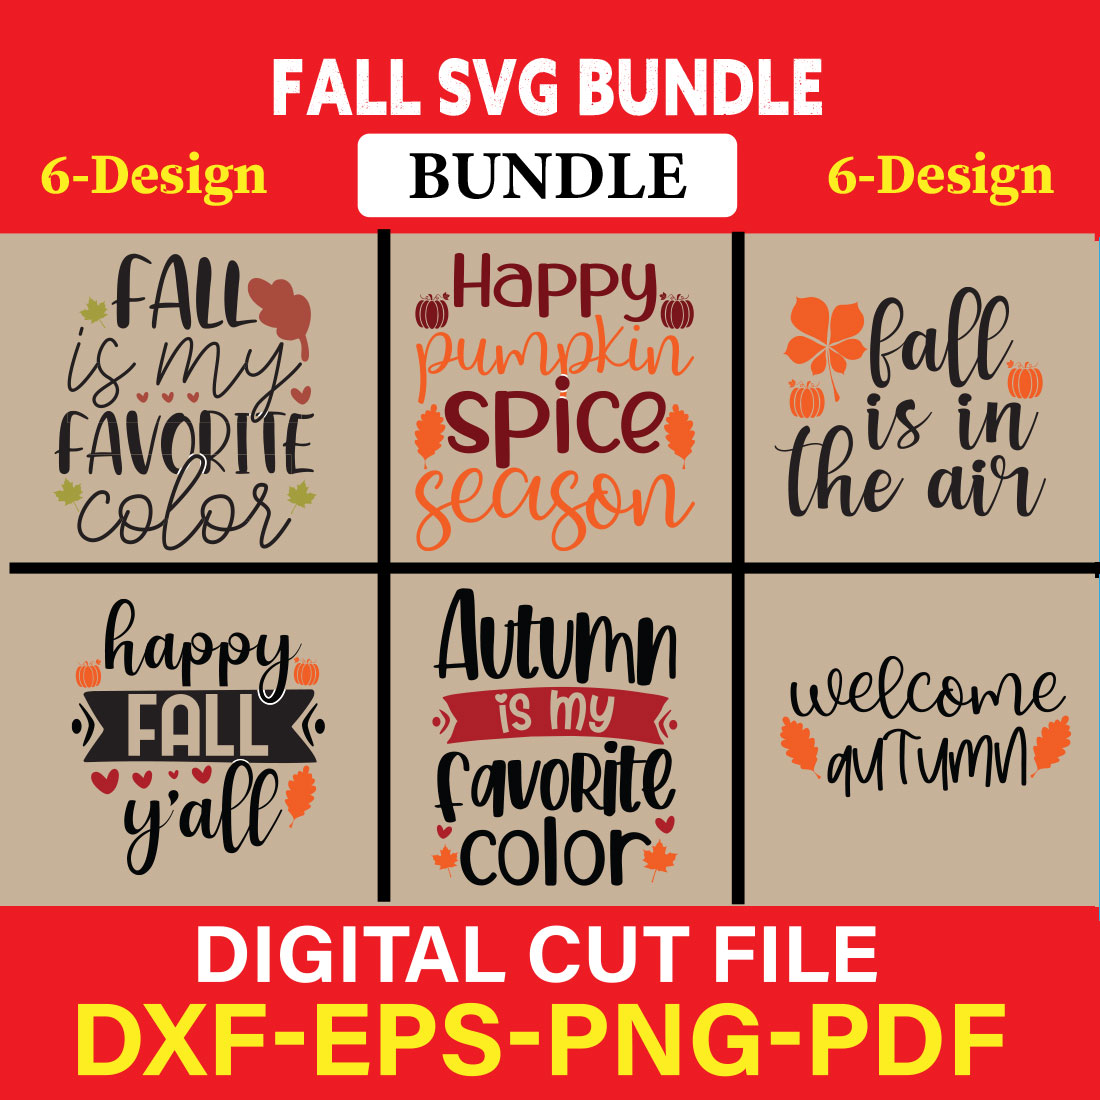 Fall SVG, Fall SVG Bundle, Autumn Svg, Thanksgiving Svg, Fall Svg Designs, Fall Sign, Autumn Bundle Svg, Vol-01 cover image.